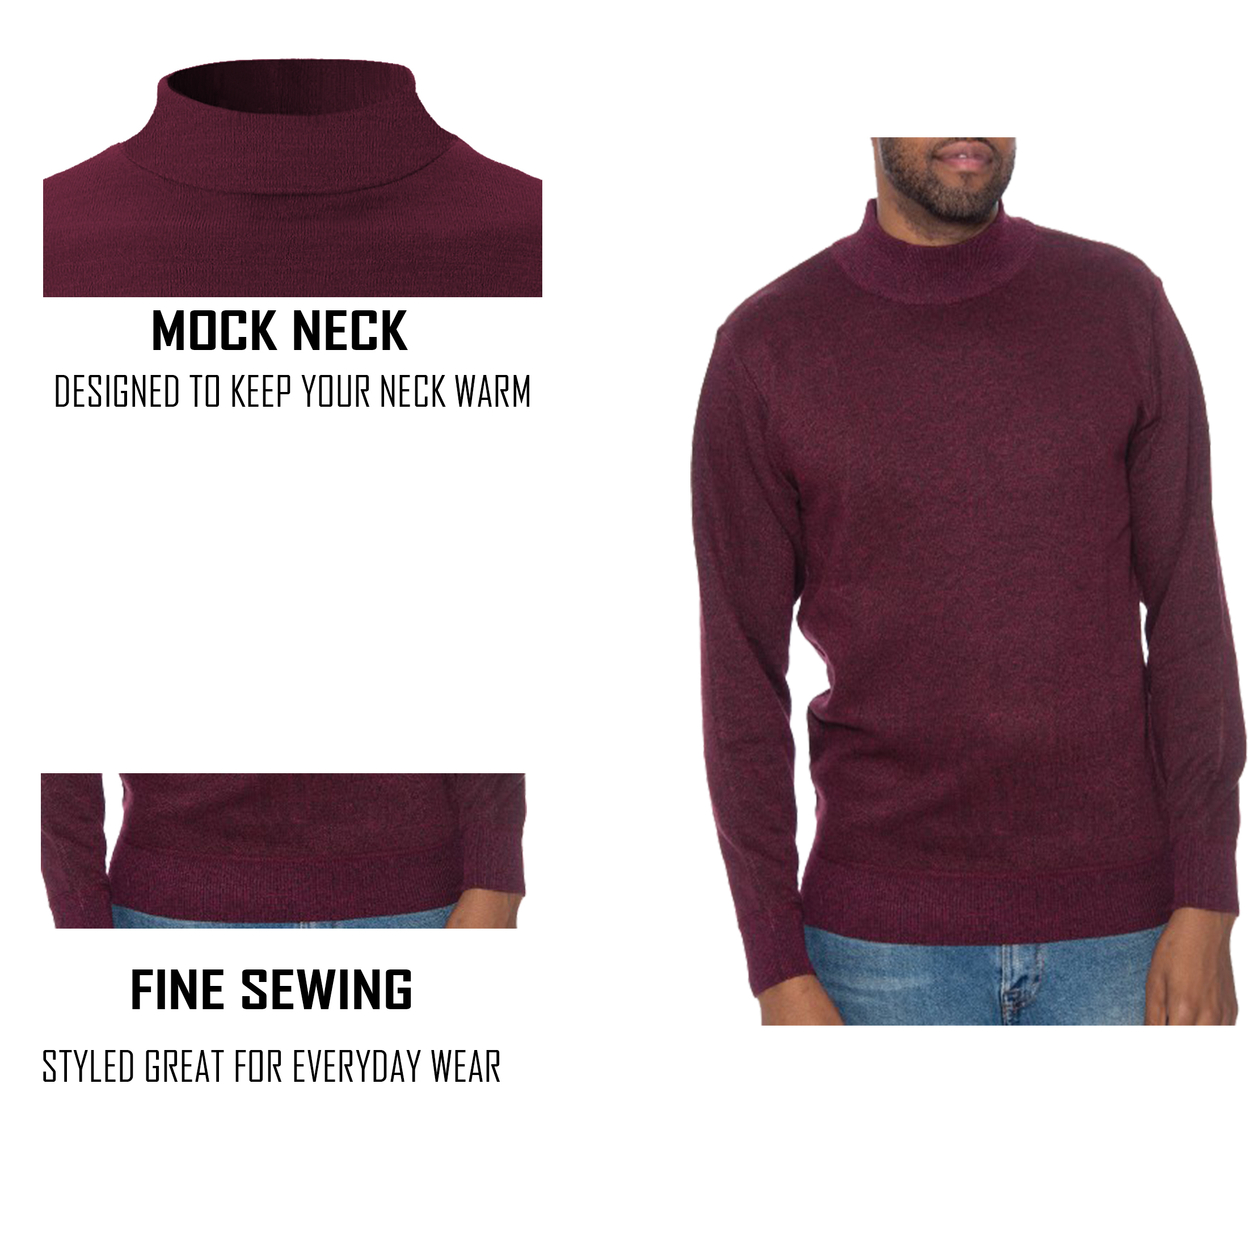 2-Pack: Men's Winter Warm Cozy Knit Slim Fit Mock Neck Sweater - Black & White, Medium